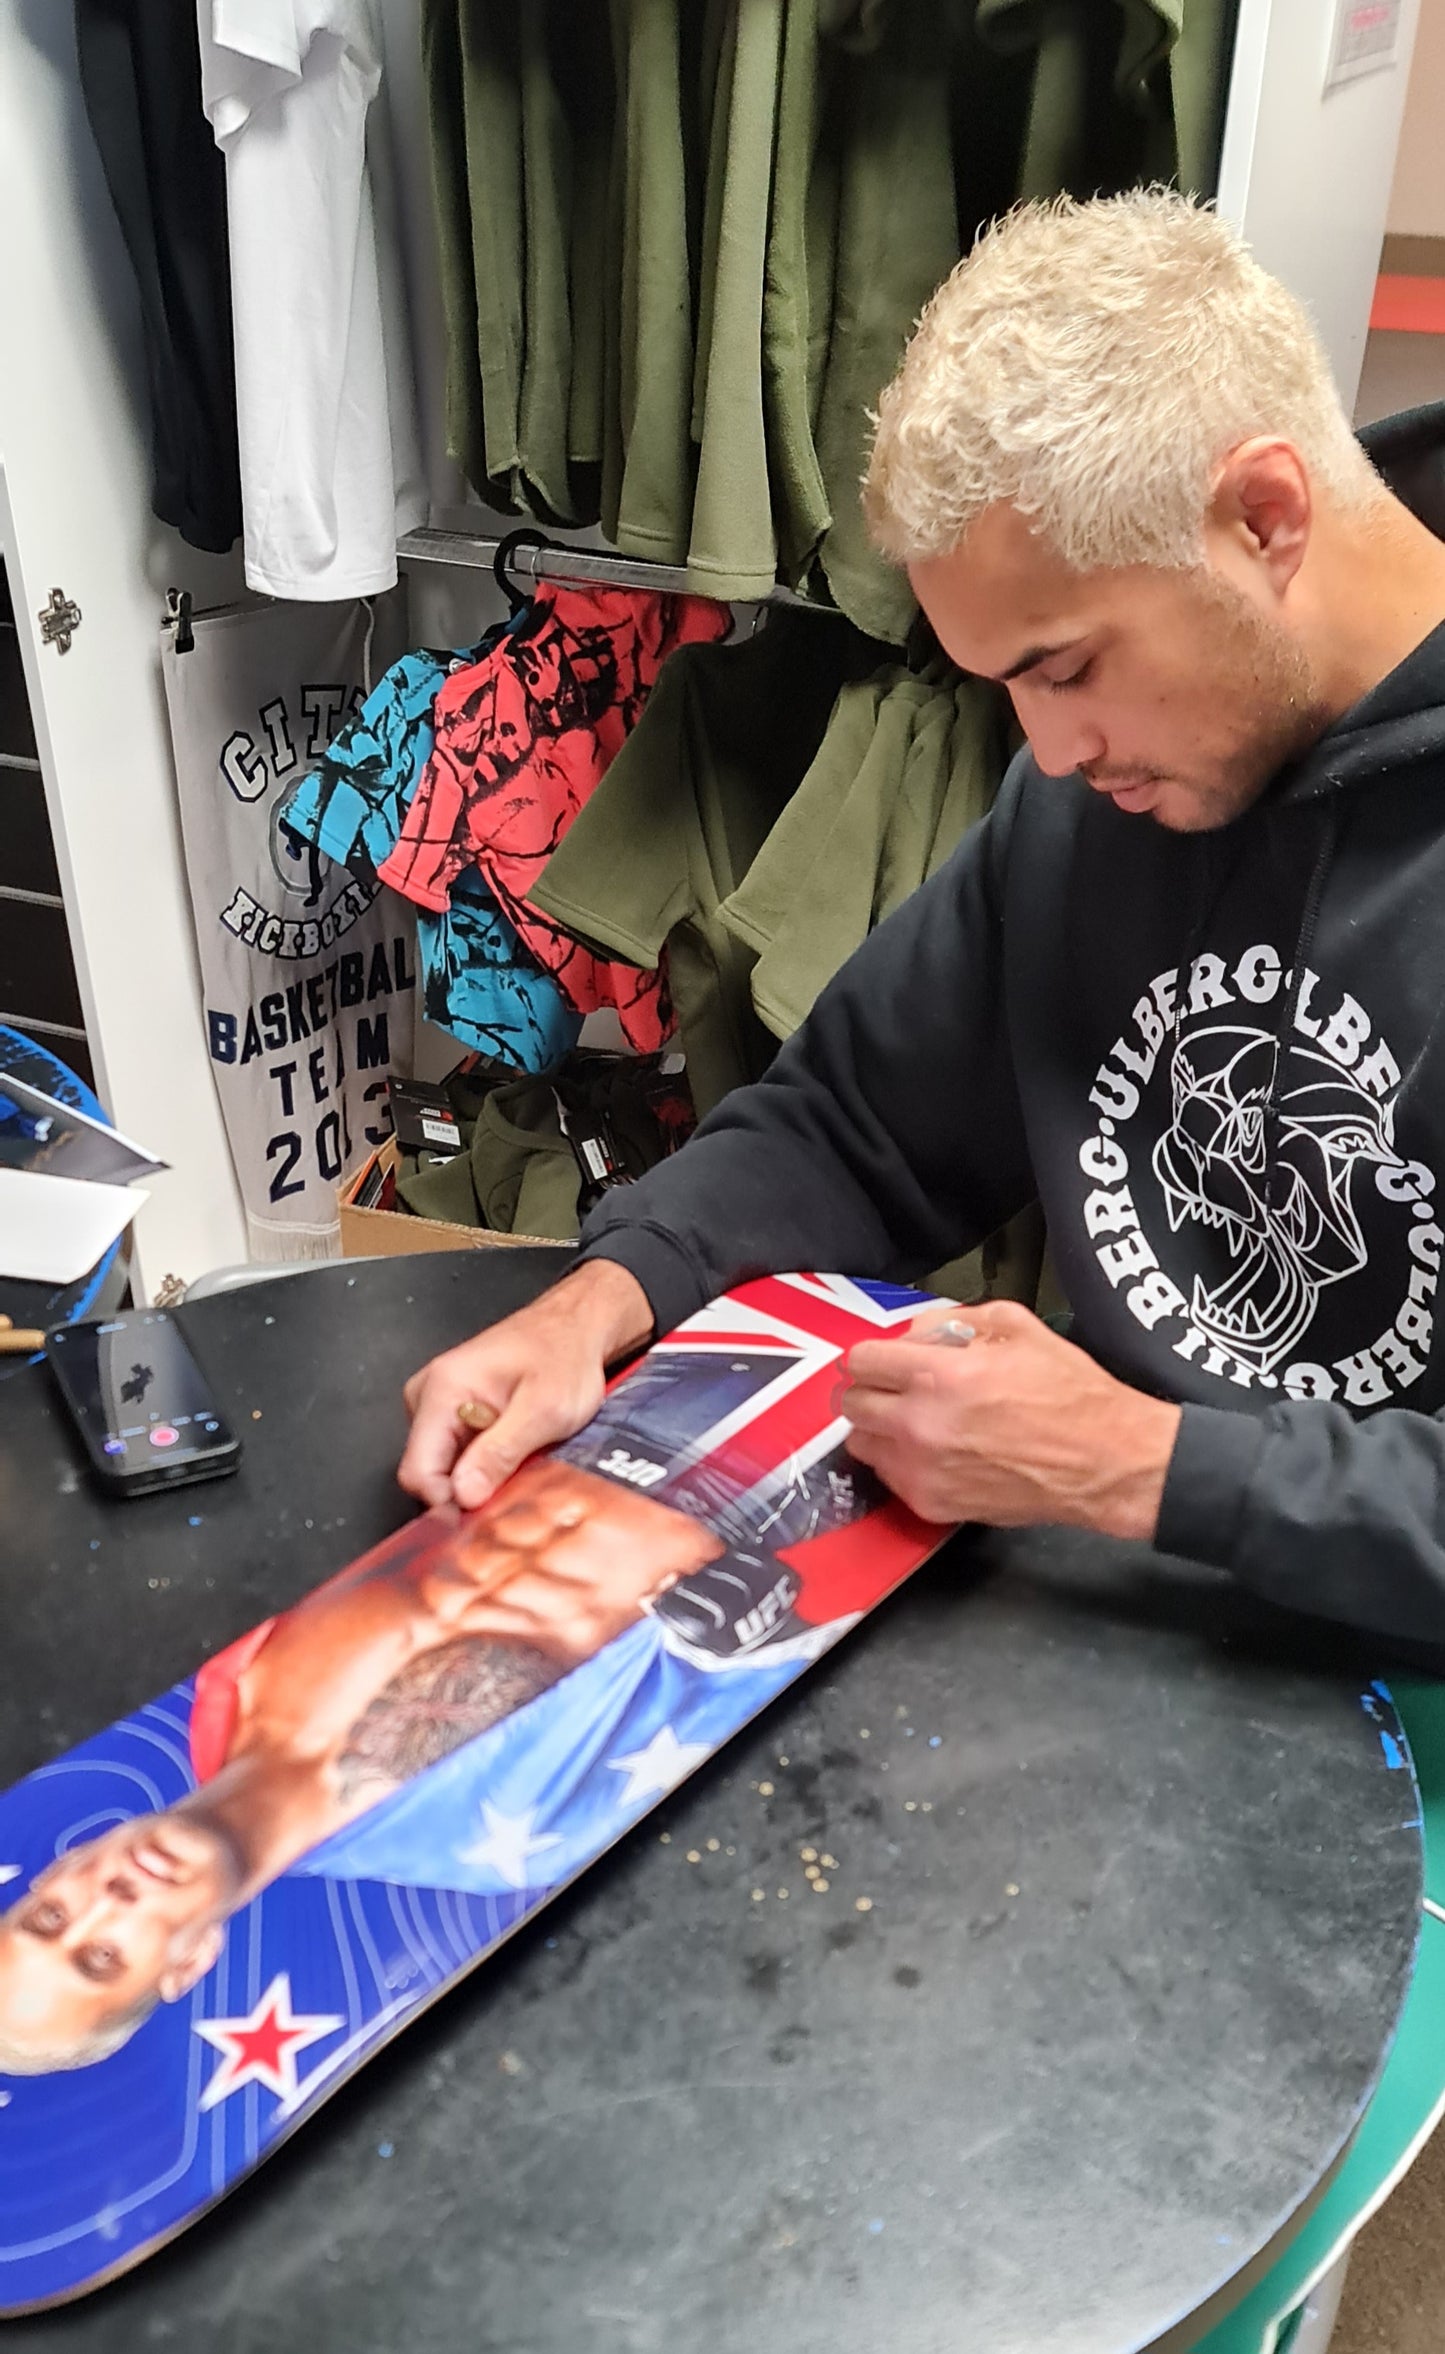 Carlos 'Black Jag' Ulberg skate art NZ FLAG DESIGN